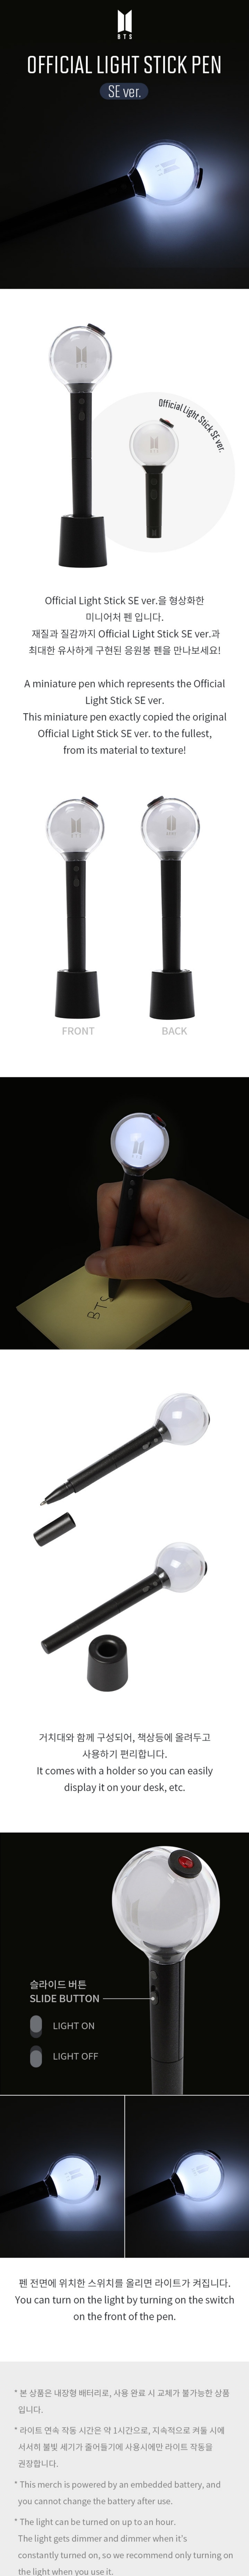 BTS Official Lightstick Pen SE ver